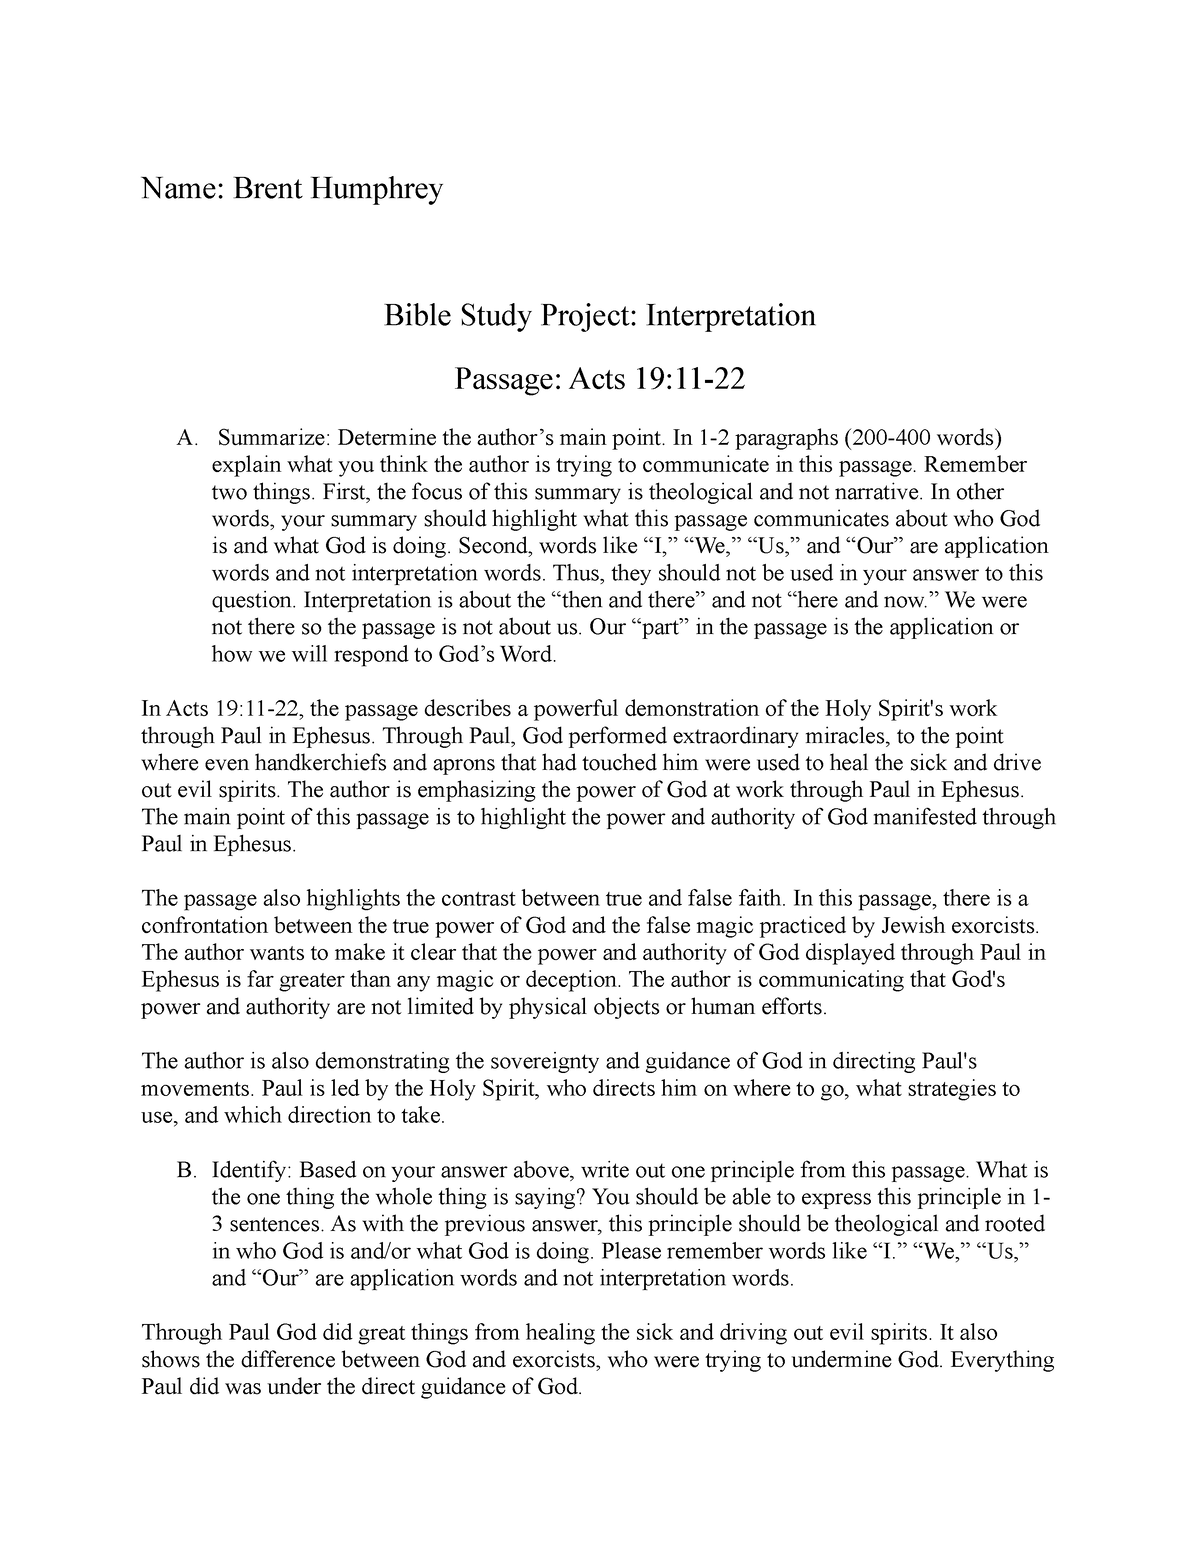 bible study project interpretation assignment